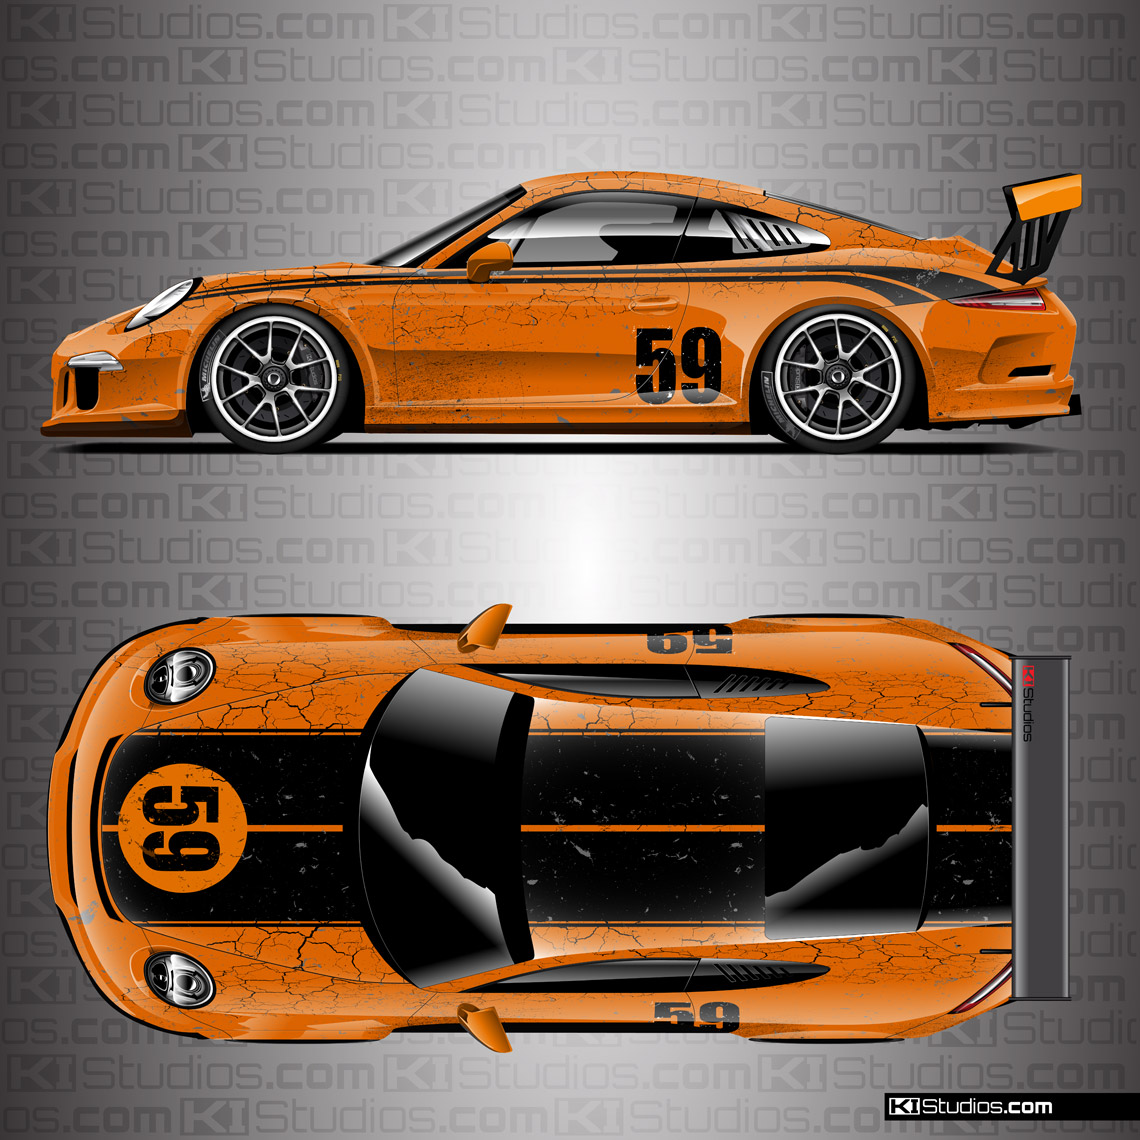 Porsche 991 GT3 Cup Car Brumos Porsche Style Distressed Livery by KI Studios - Orange, Black, Black